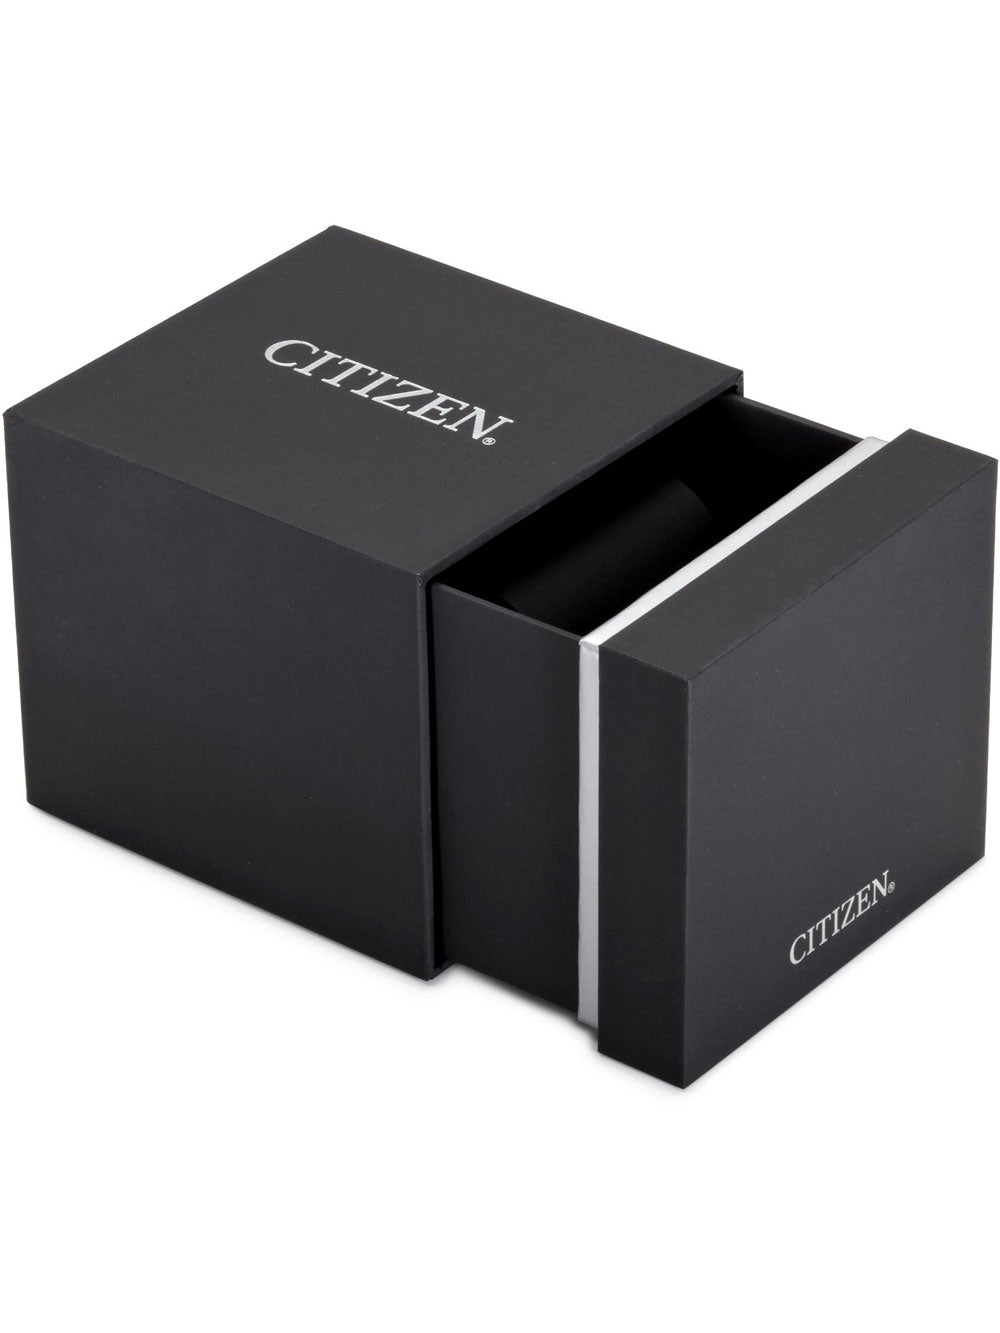 Citizen Eco-Drive Men AT9036-08E radio clock 10 ATM sapphire crystal 44mm